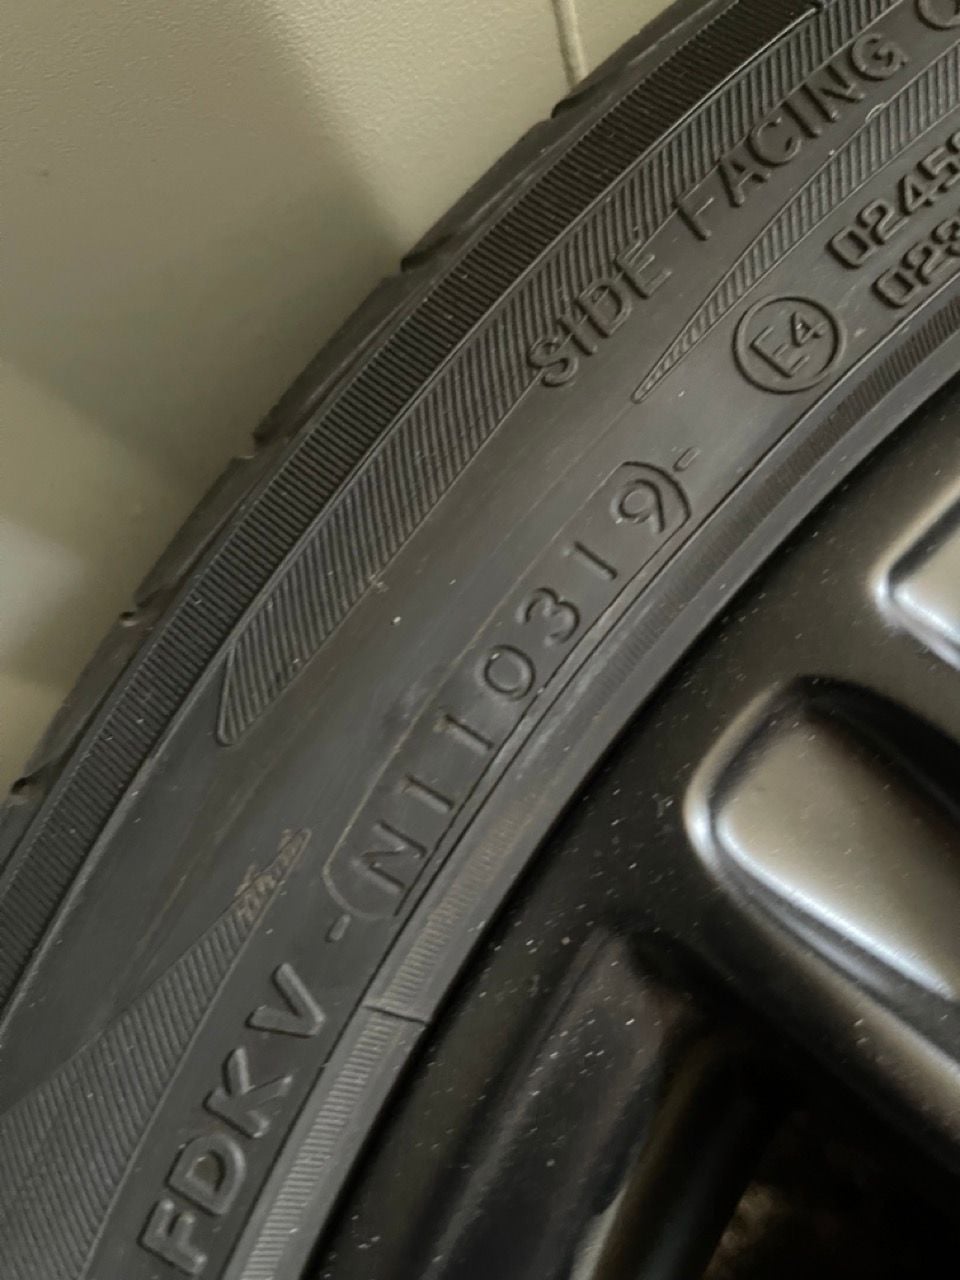 Wheels and Tires/Axles - 21” Sport Edition OEM wheels w/ OEM TPMS + Yokohama Advan Sport CTT Takeoffs - Used - 2011 to 2018 Porsche Cayenne - Calistoga, CA 94515, United States